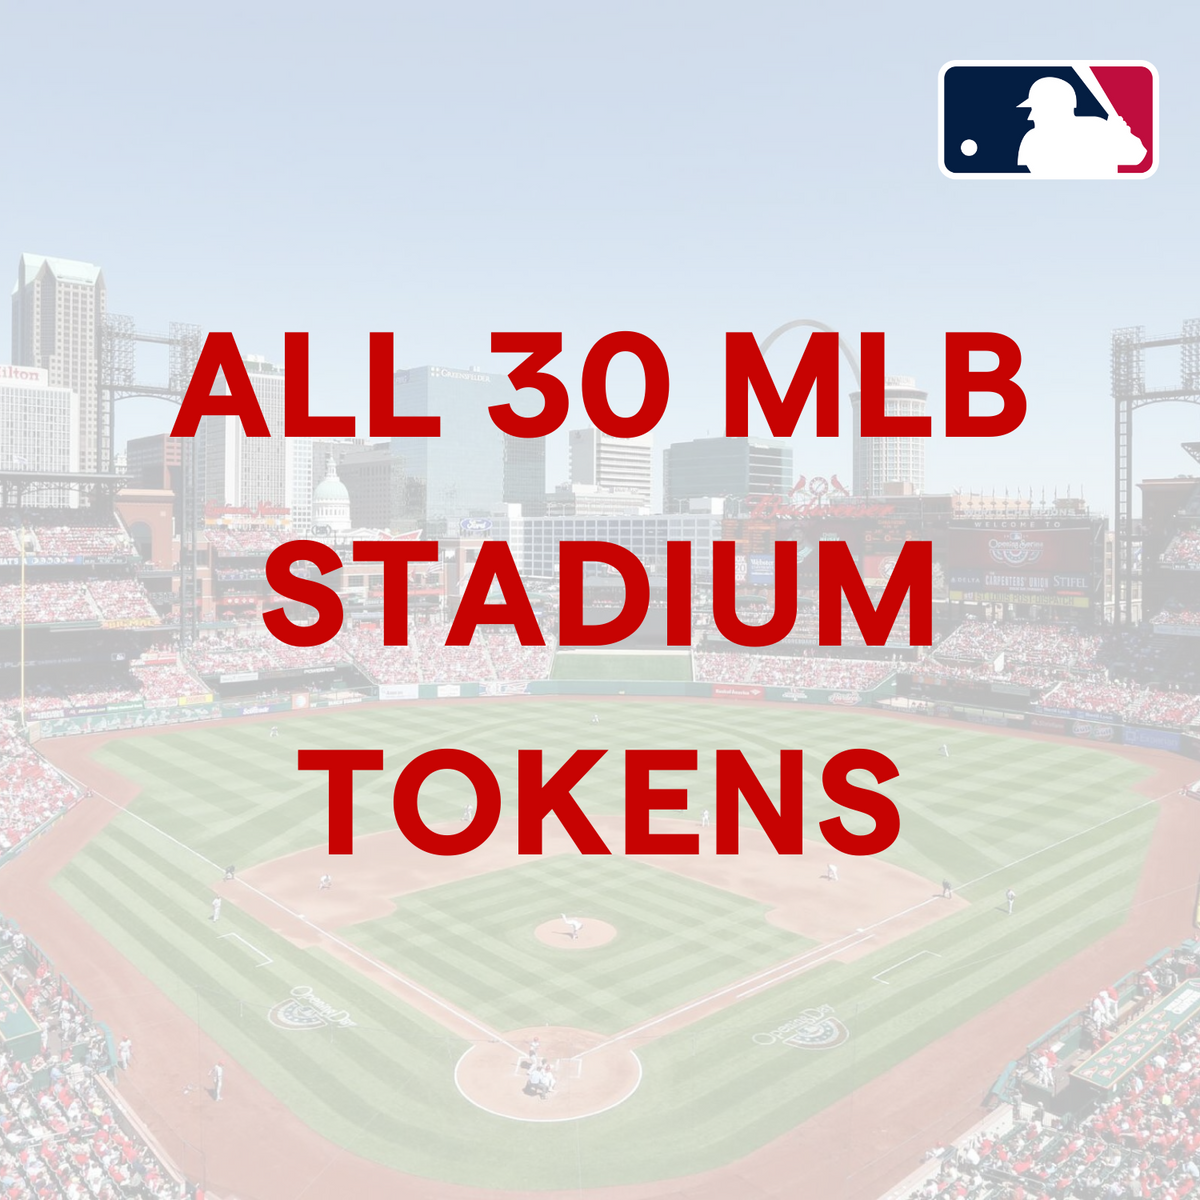 All 30 MLB Stadium Tokens (Legacy)